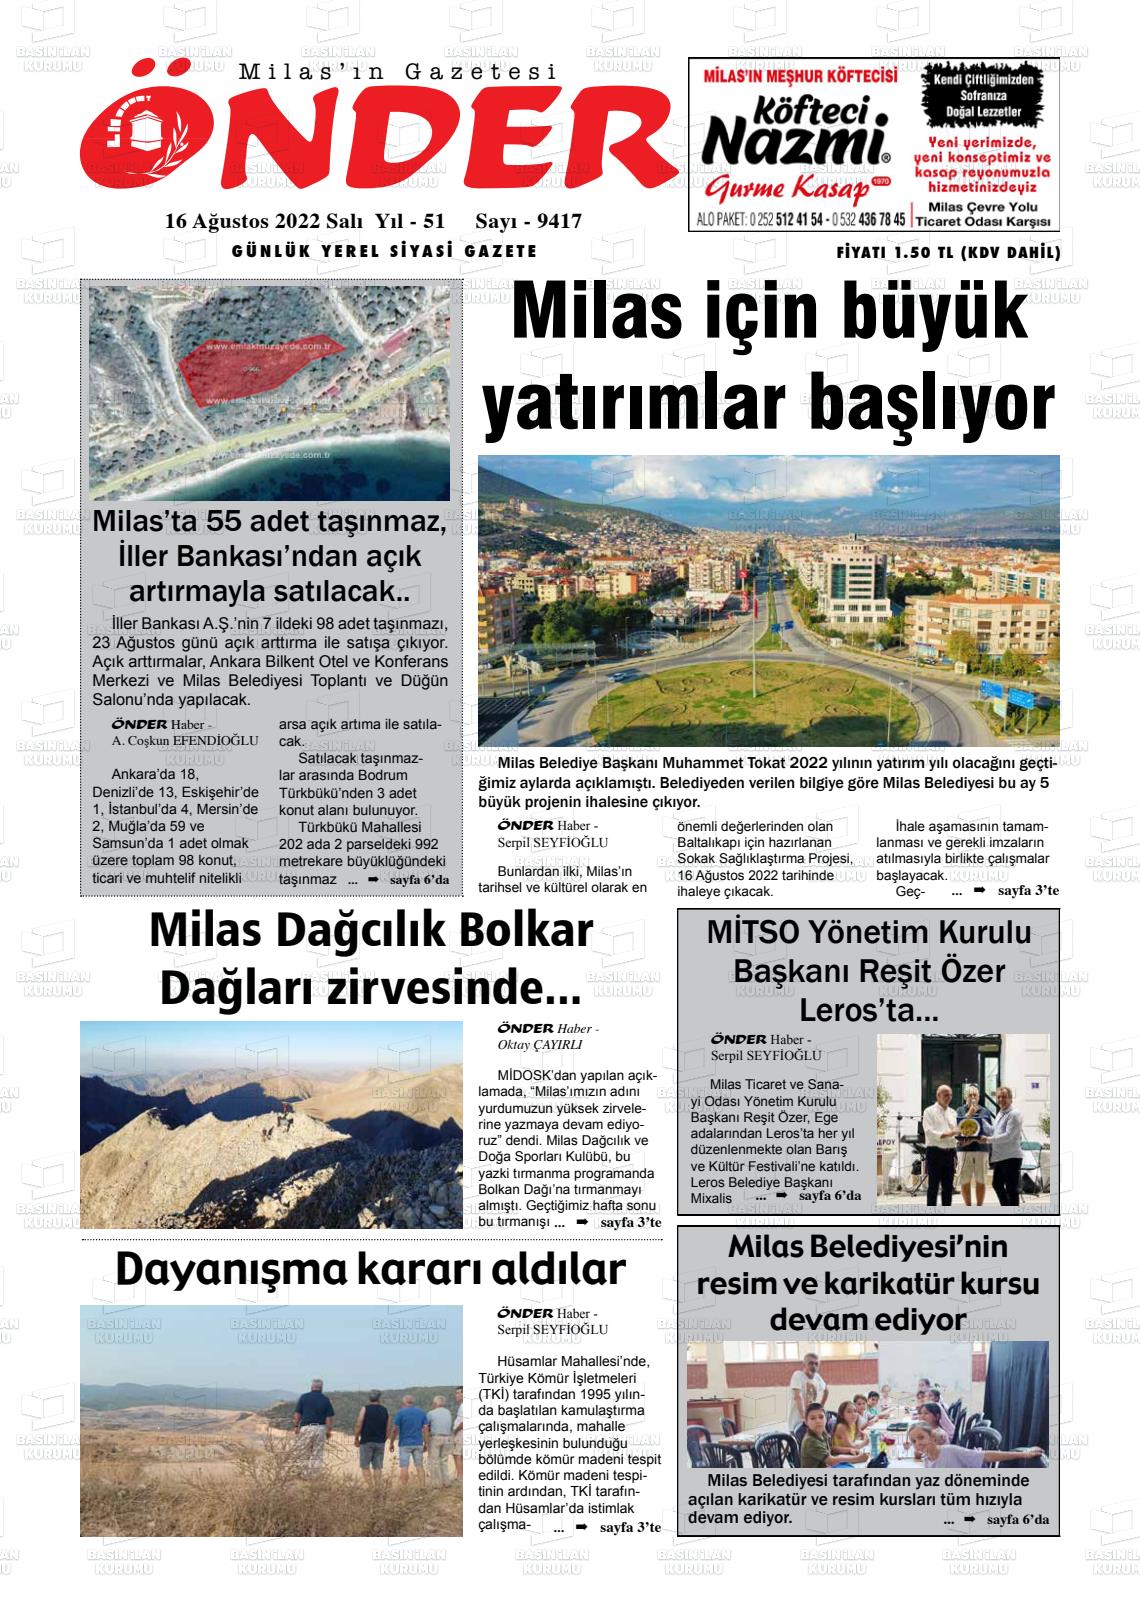 16 Ağustos 2022 Milas Önder Gazete Manşeti